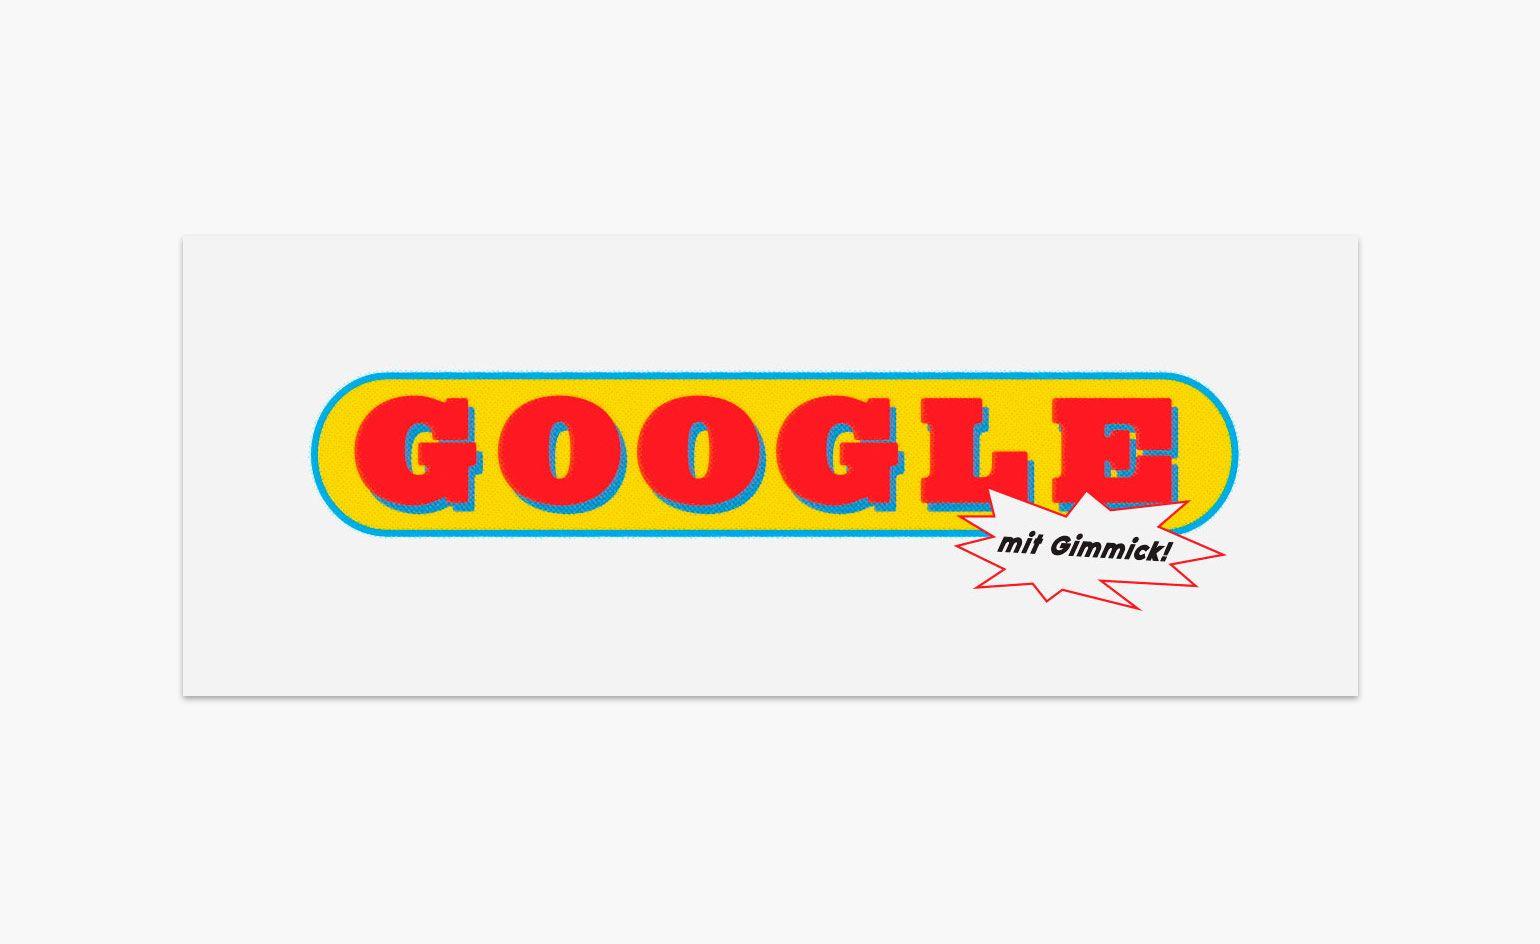 Google Doodle Logo - Top Google Doodles of all time. Wallpaper*